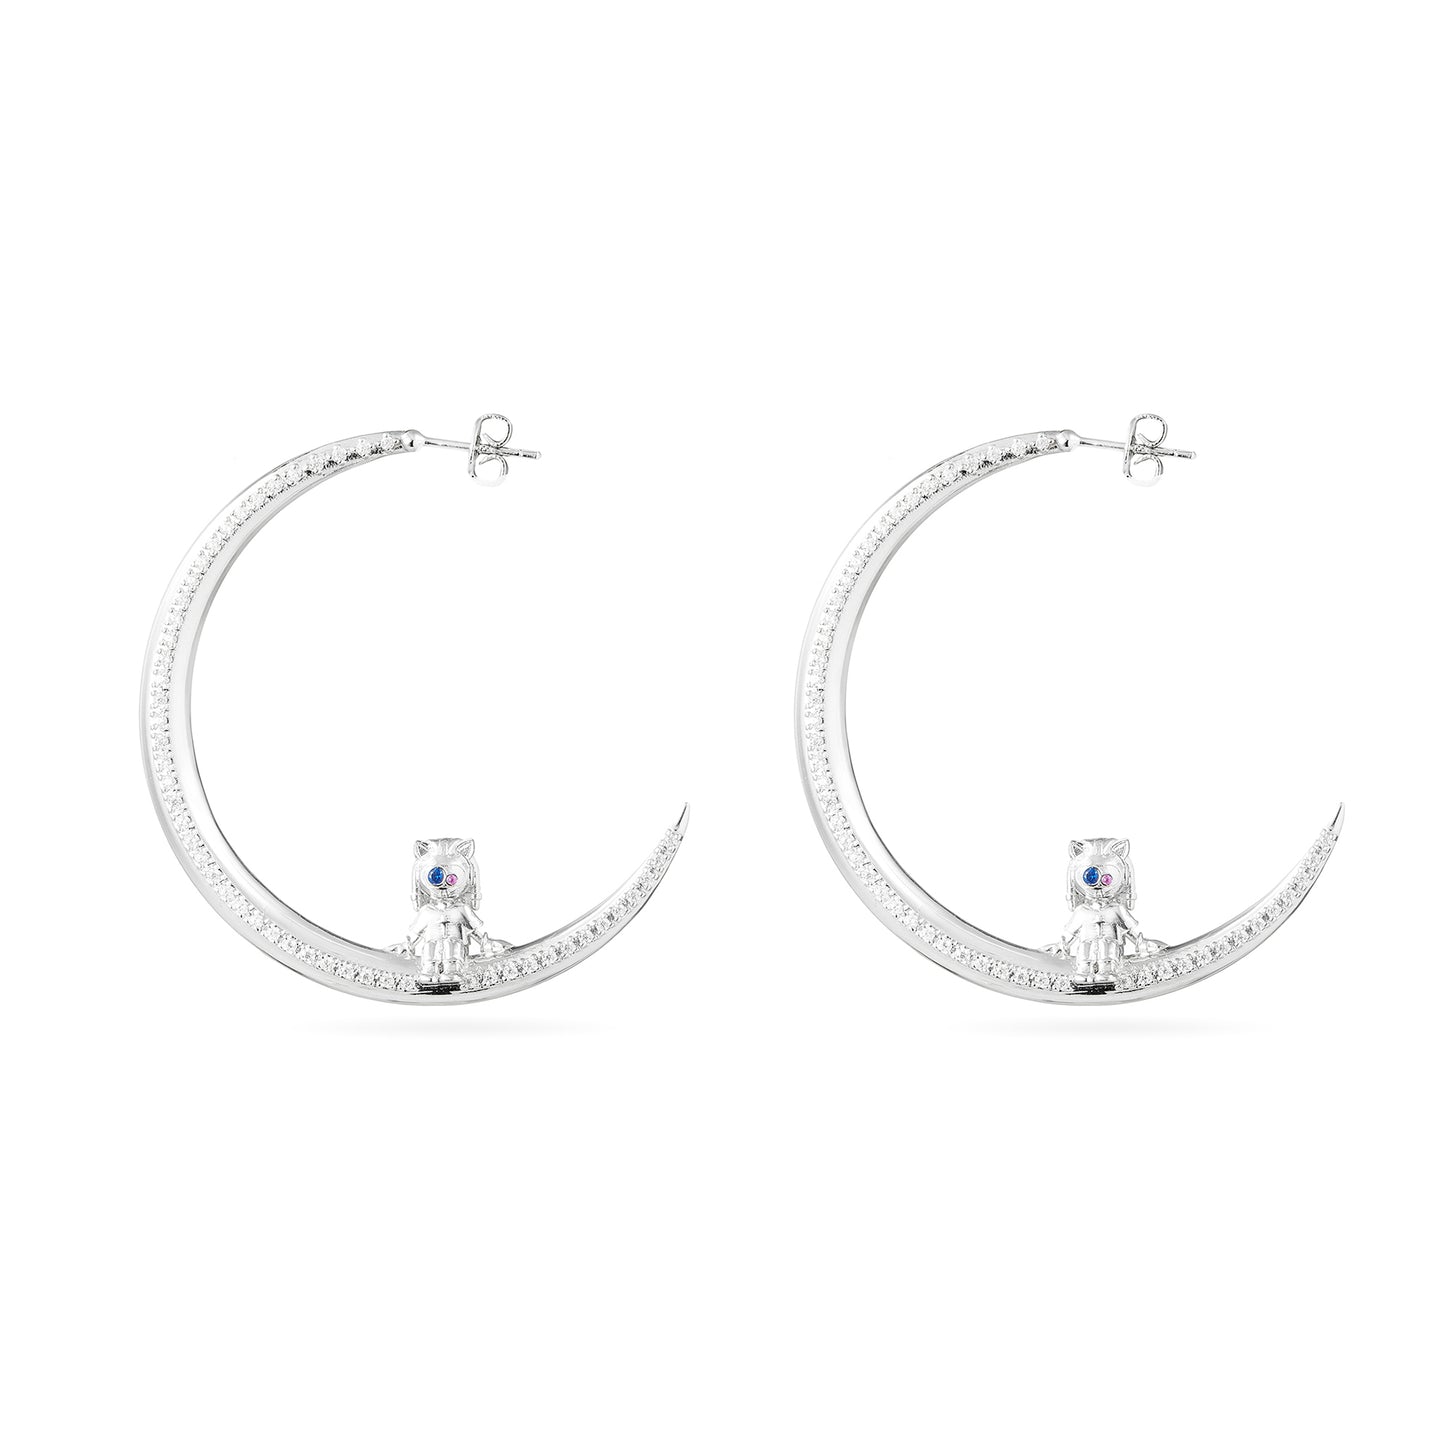 Planet Series - TATA Moon Pearl Earrings